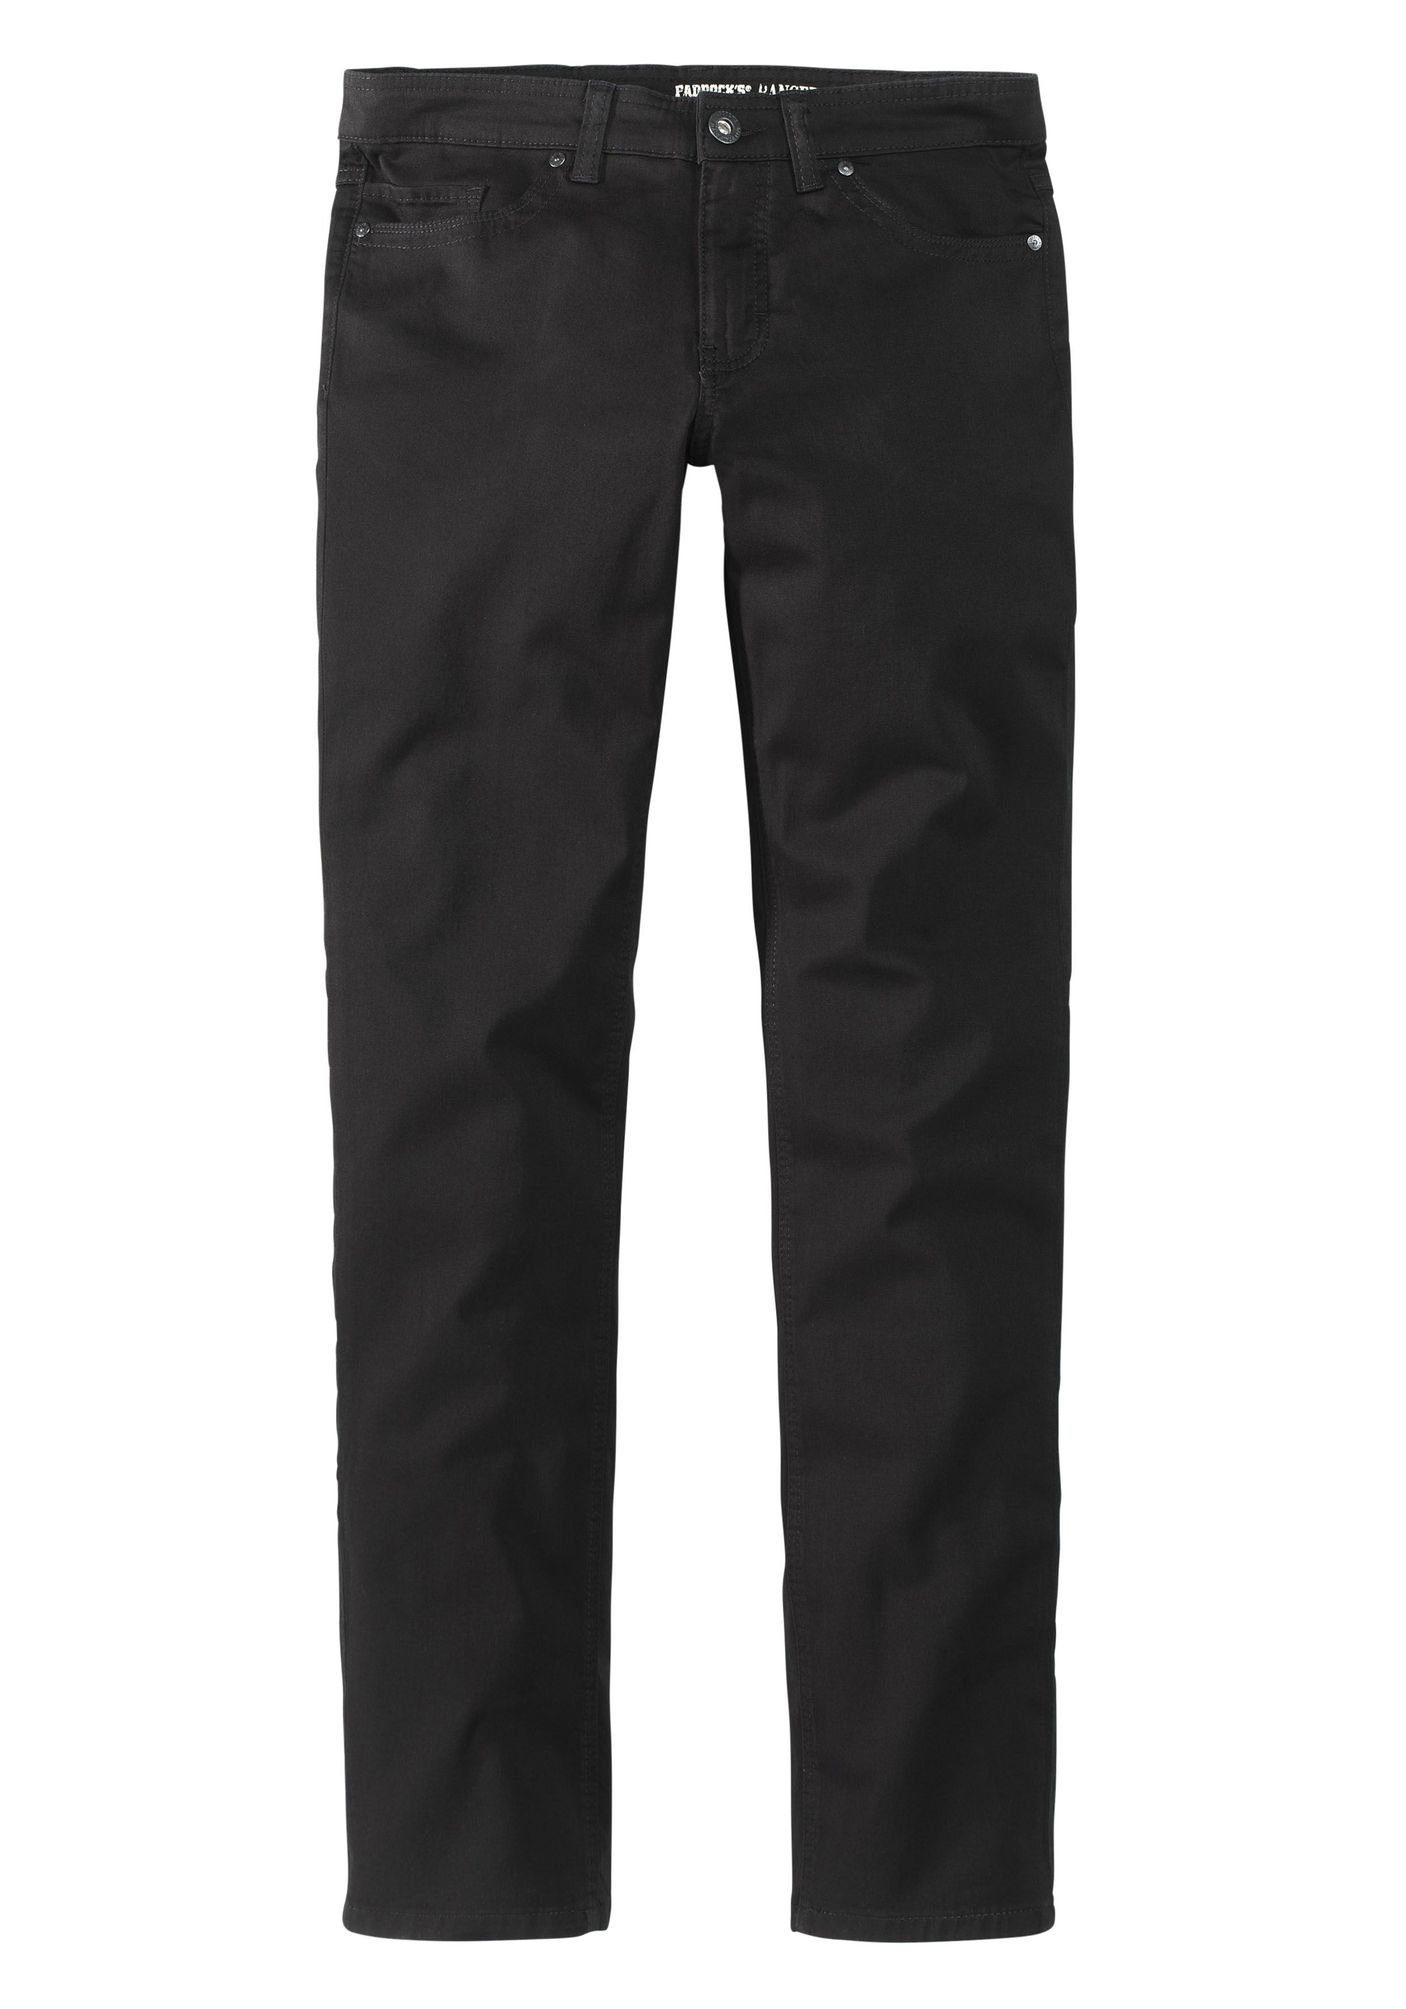 Paddock's 5-Pocket-Jeans Pipe black deep (801201496000) Ranger